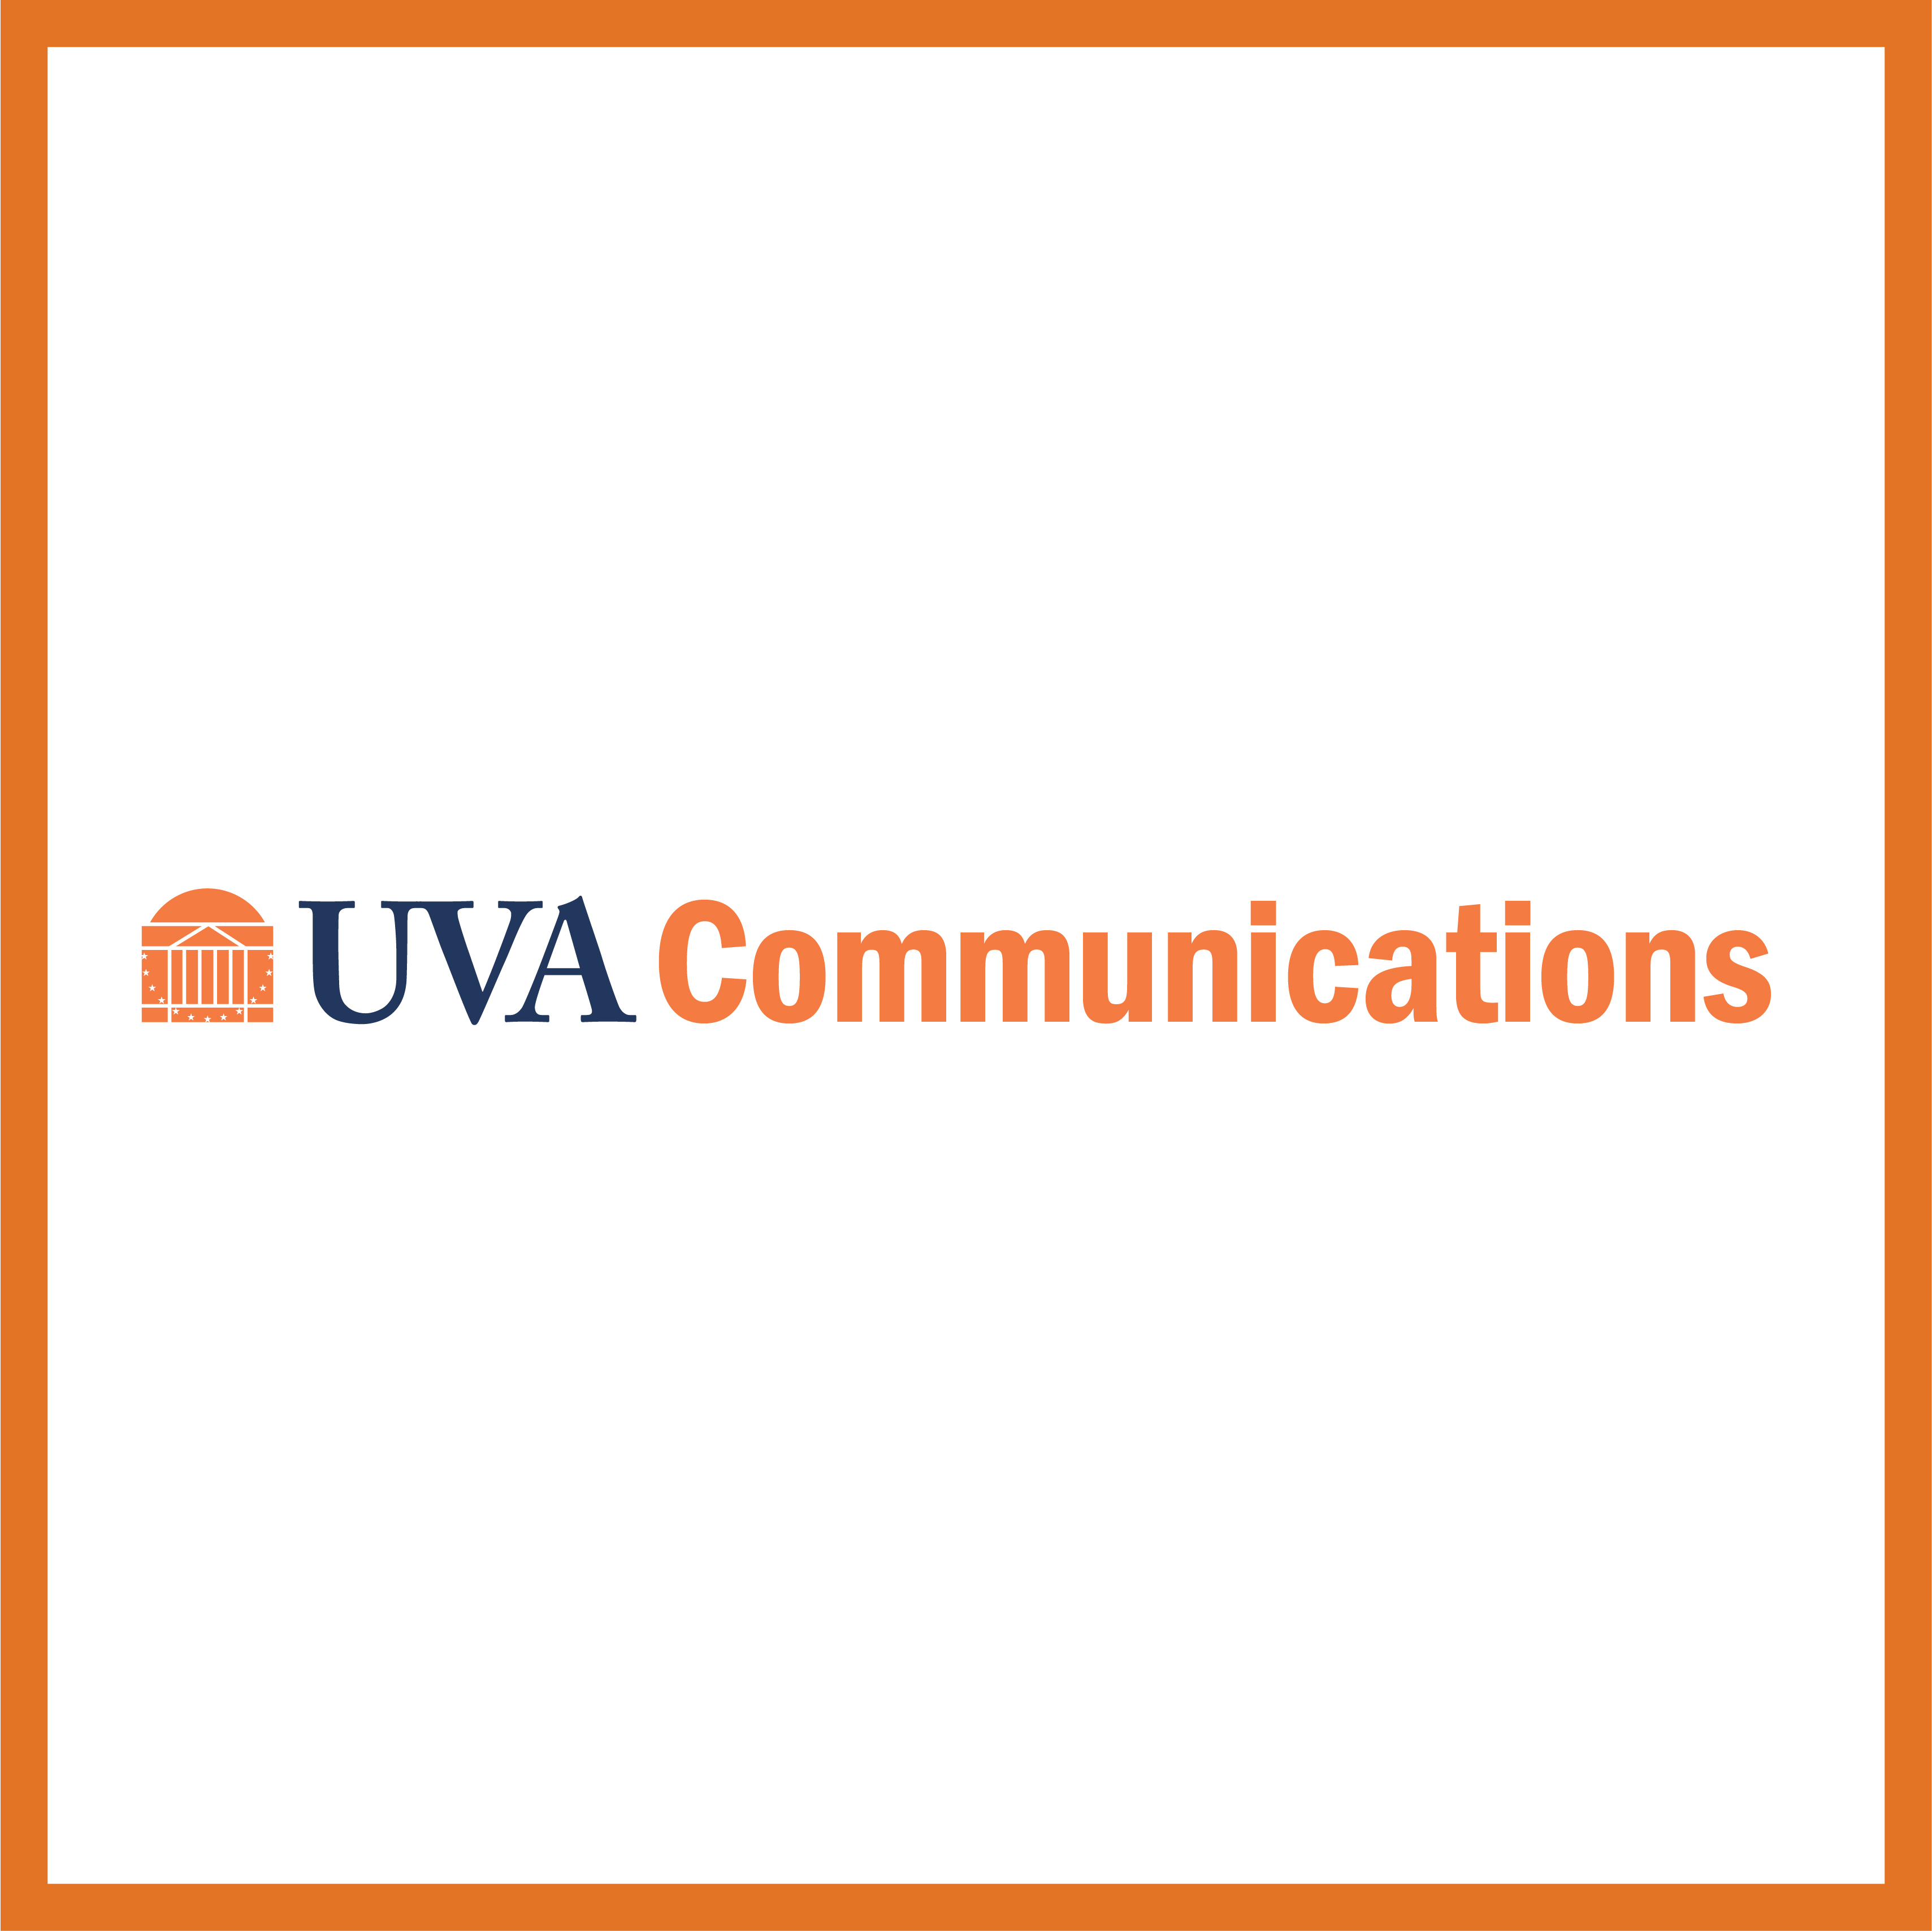 Informal horizontal 2 logo for University Communications